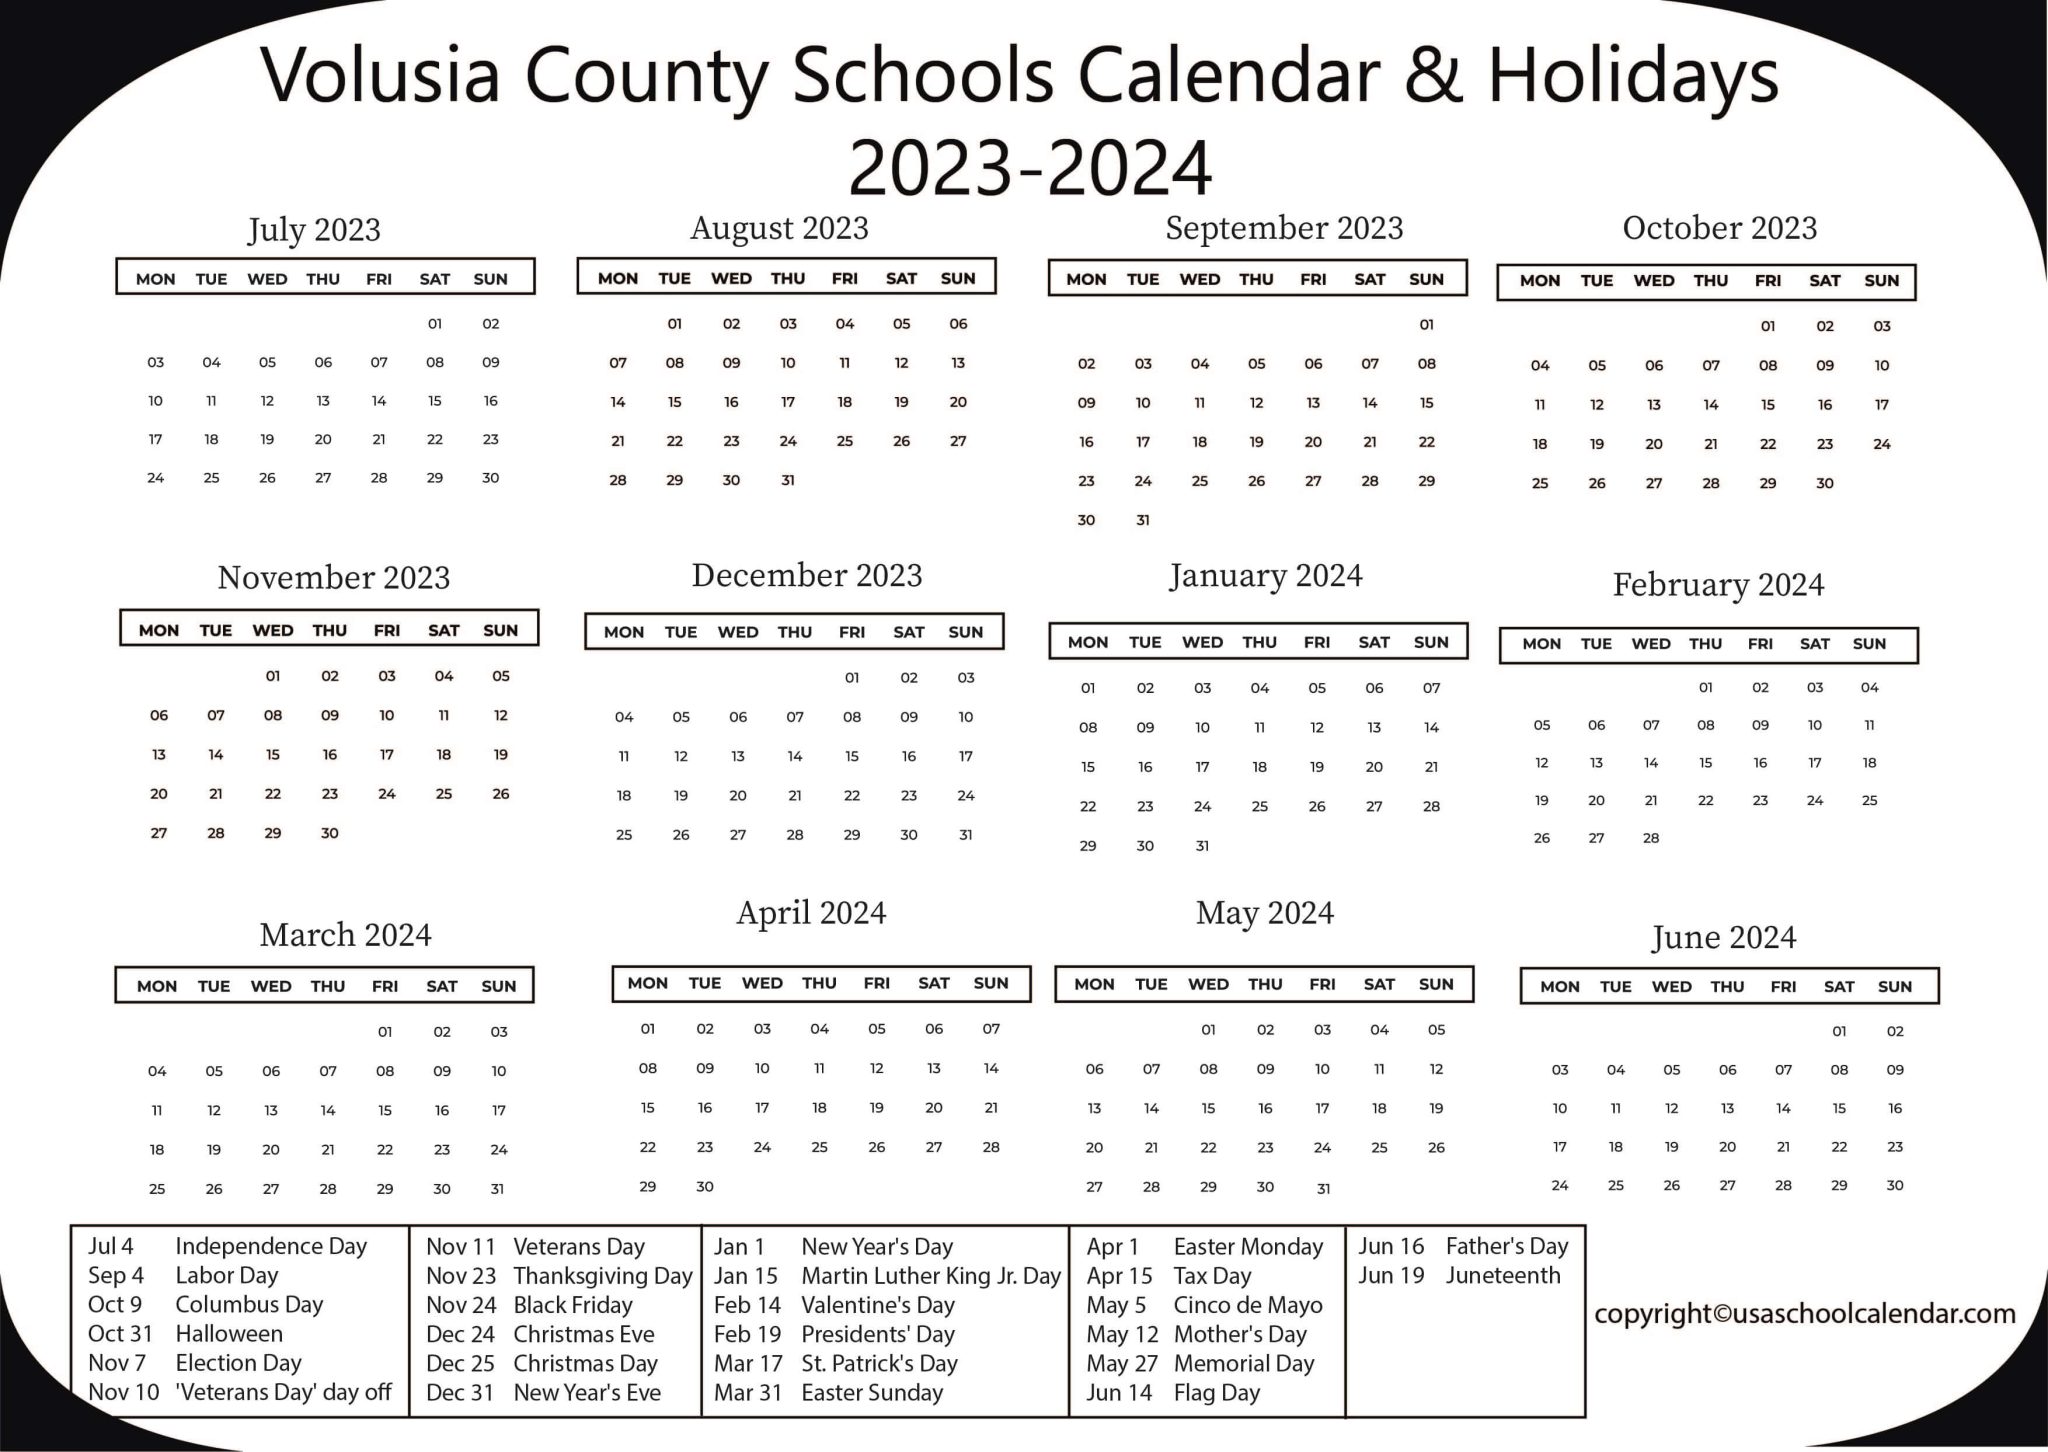 Volusia County Schools Calendar 2025-2026 - Maiga Roxanna